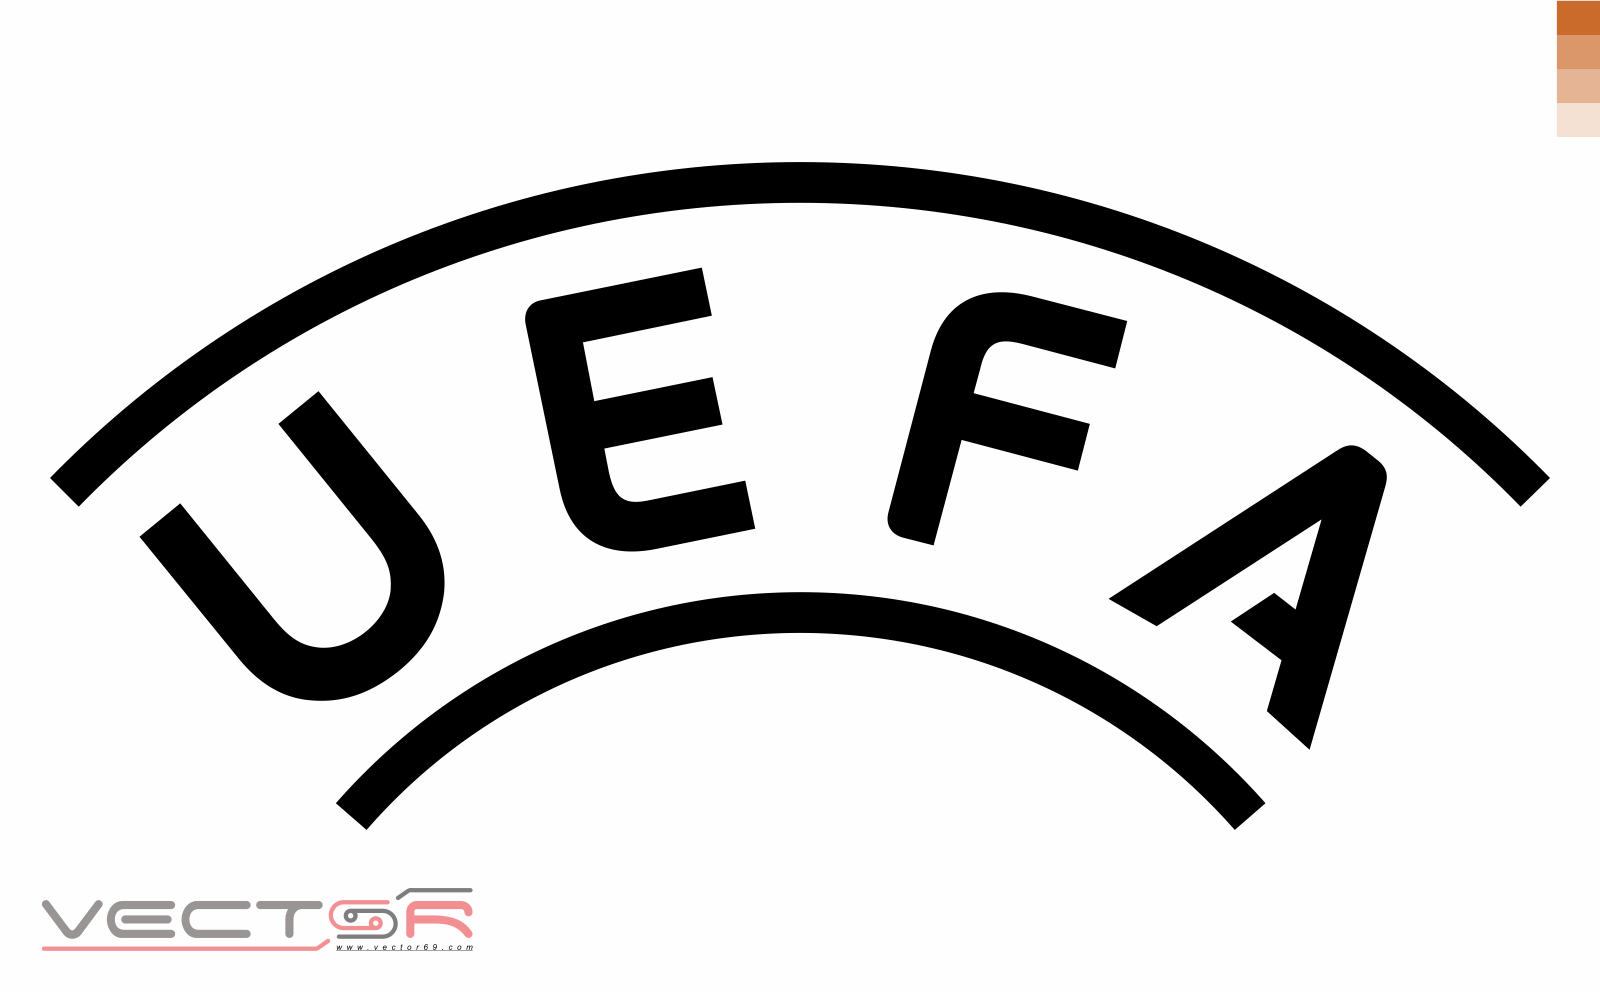 Union of European Football Associations (UEFA) Logo - Download Vector File AI (Adobe Illustrator)